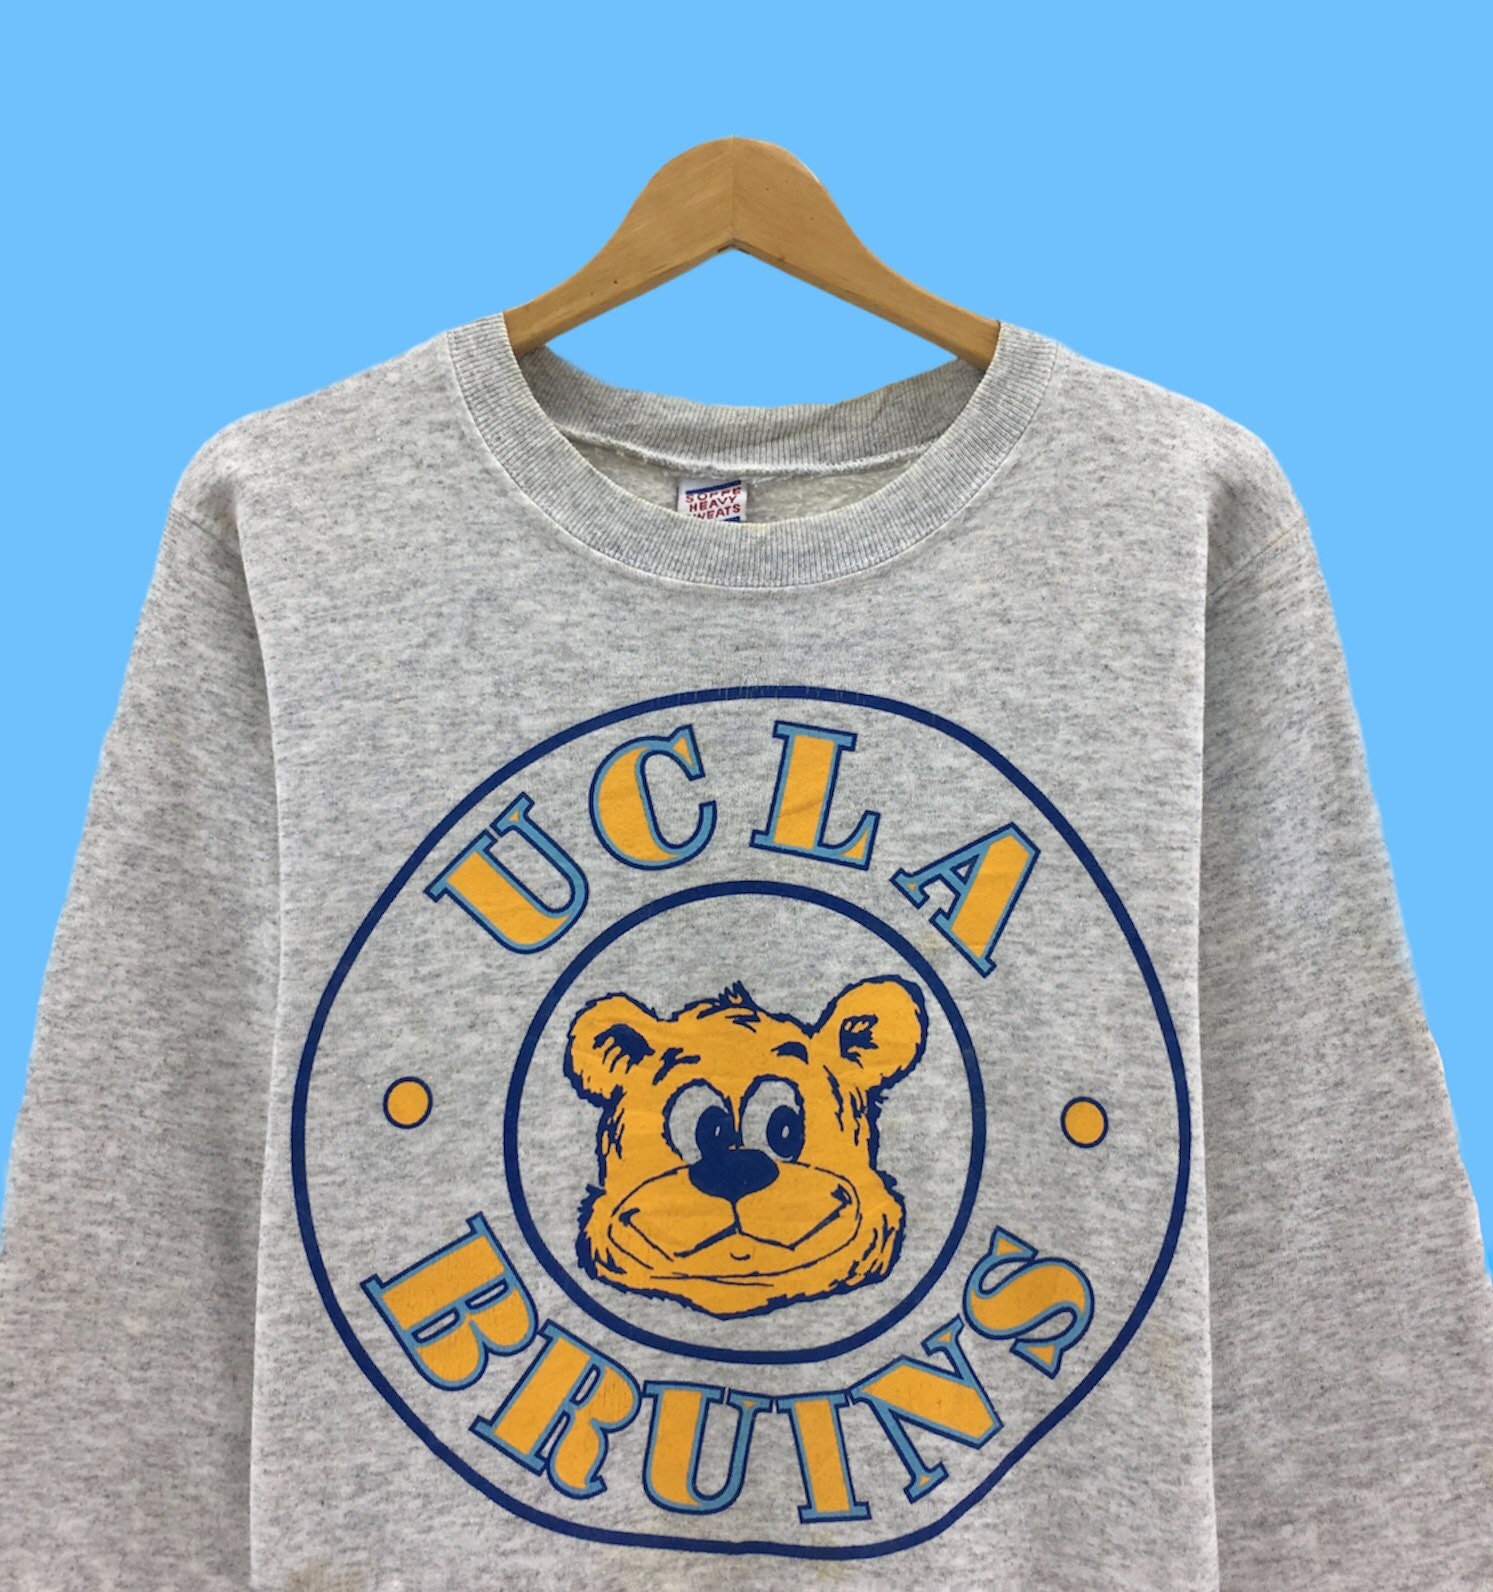 UCLA Joe Bear Bruins Pullover Hoodie White - Campus Store